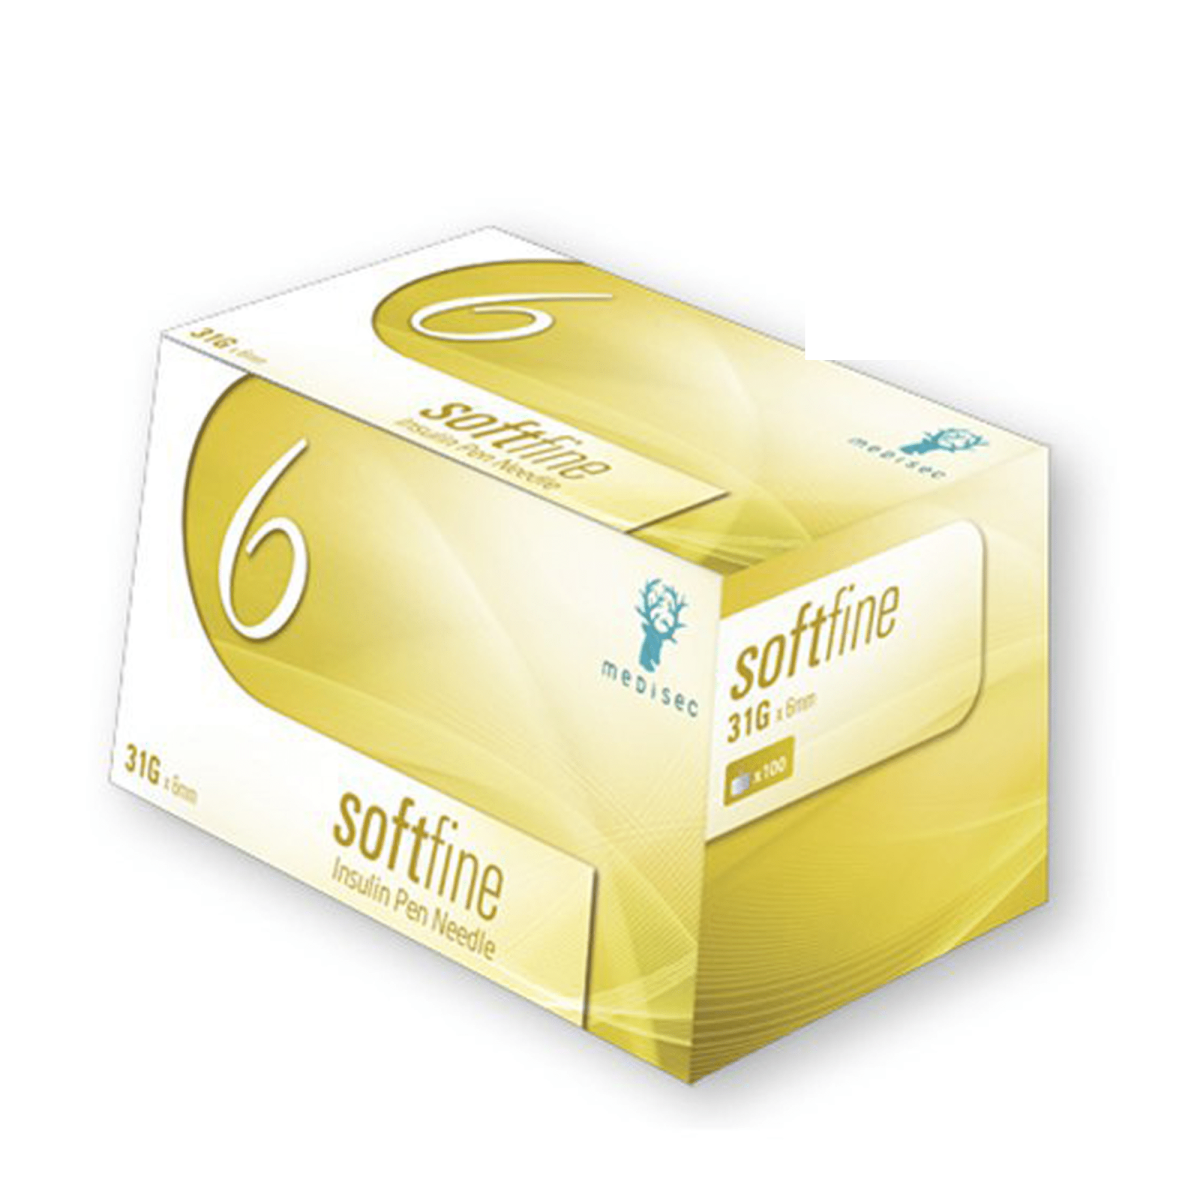 سرسوزن 6 softfine 31G*6MM